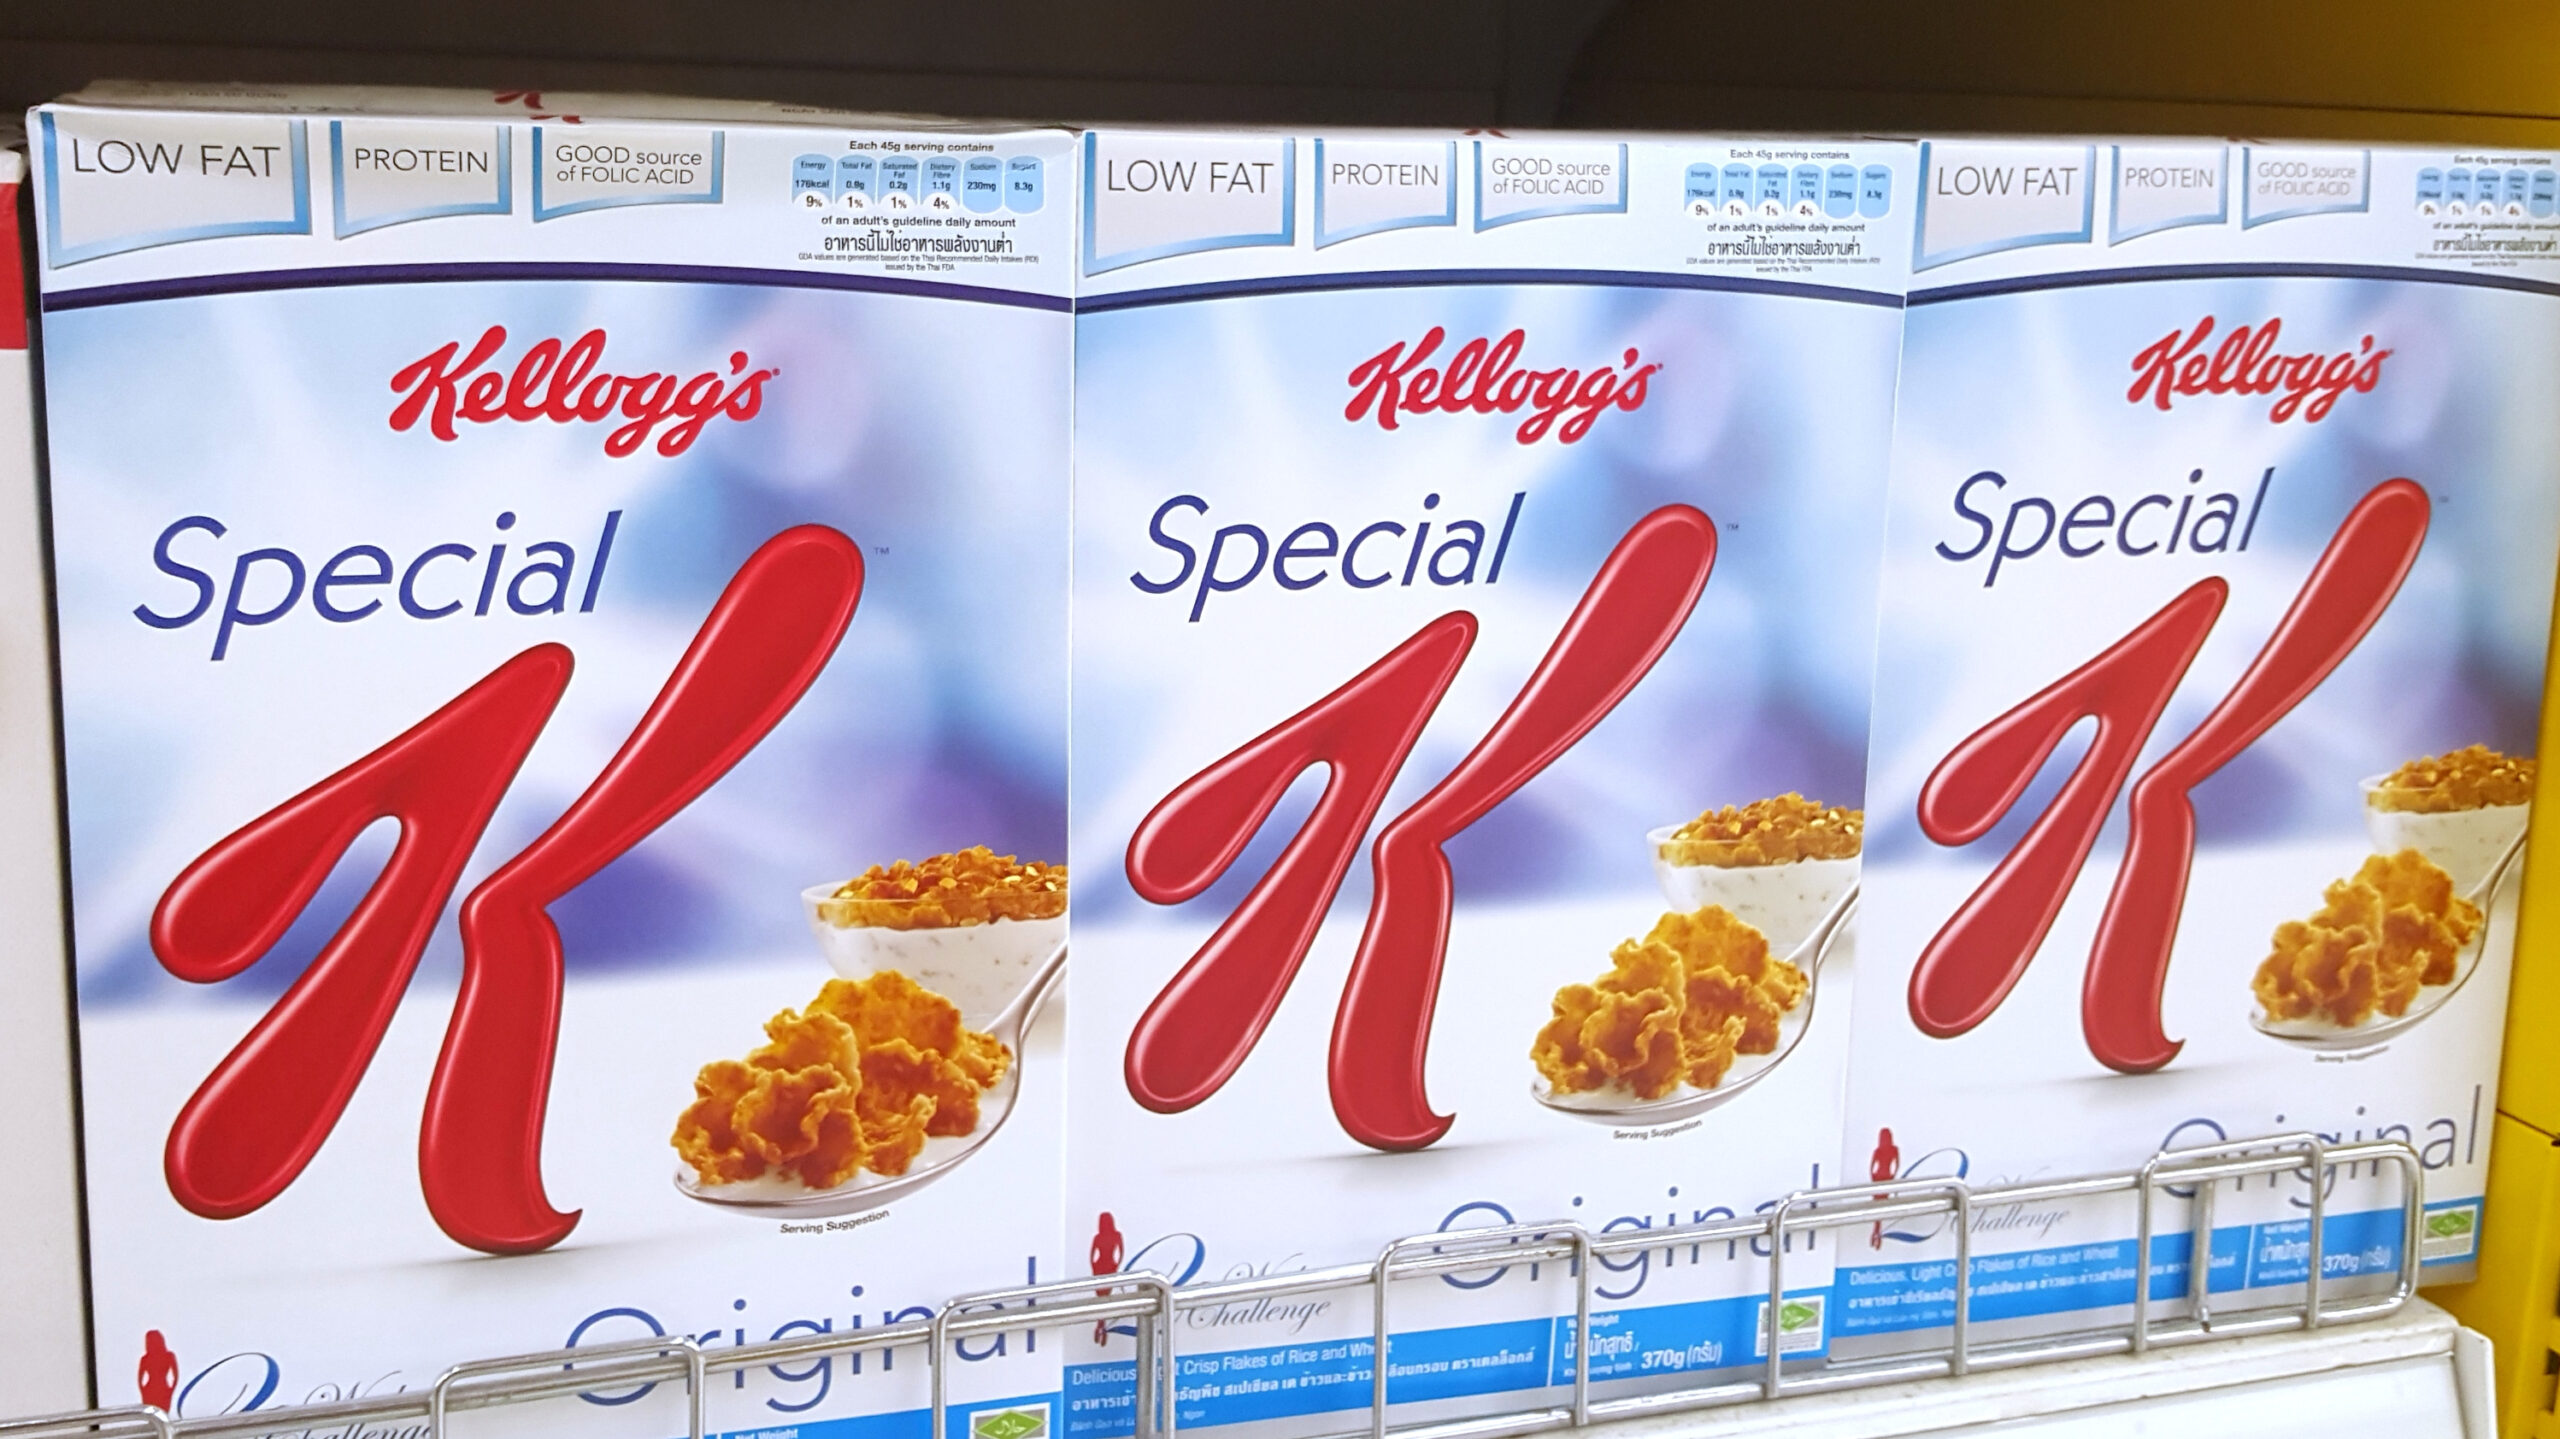 Kellogg's® Special K® Original Cereal